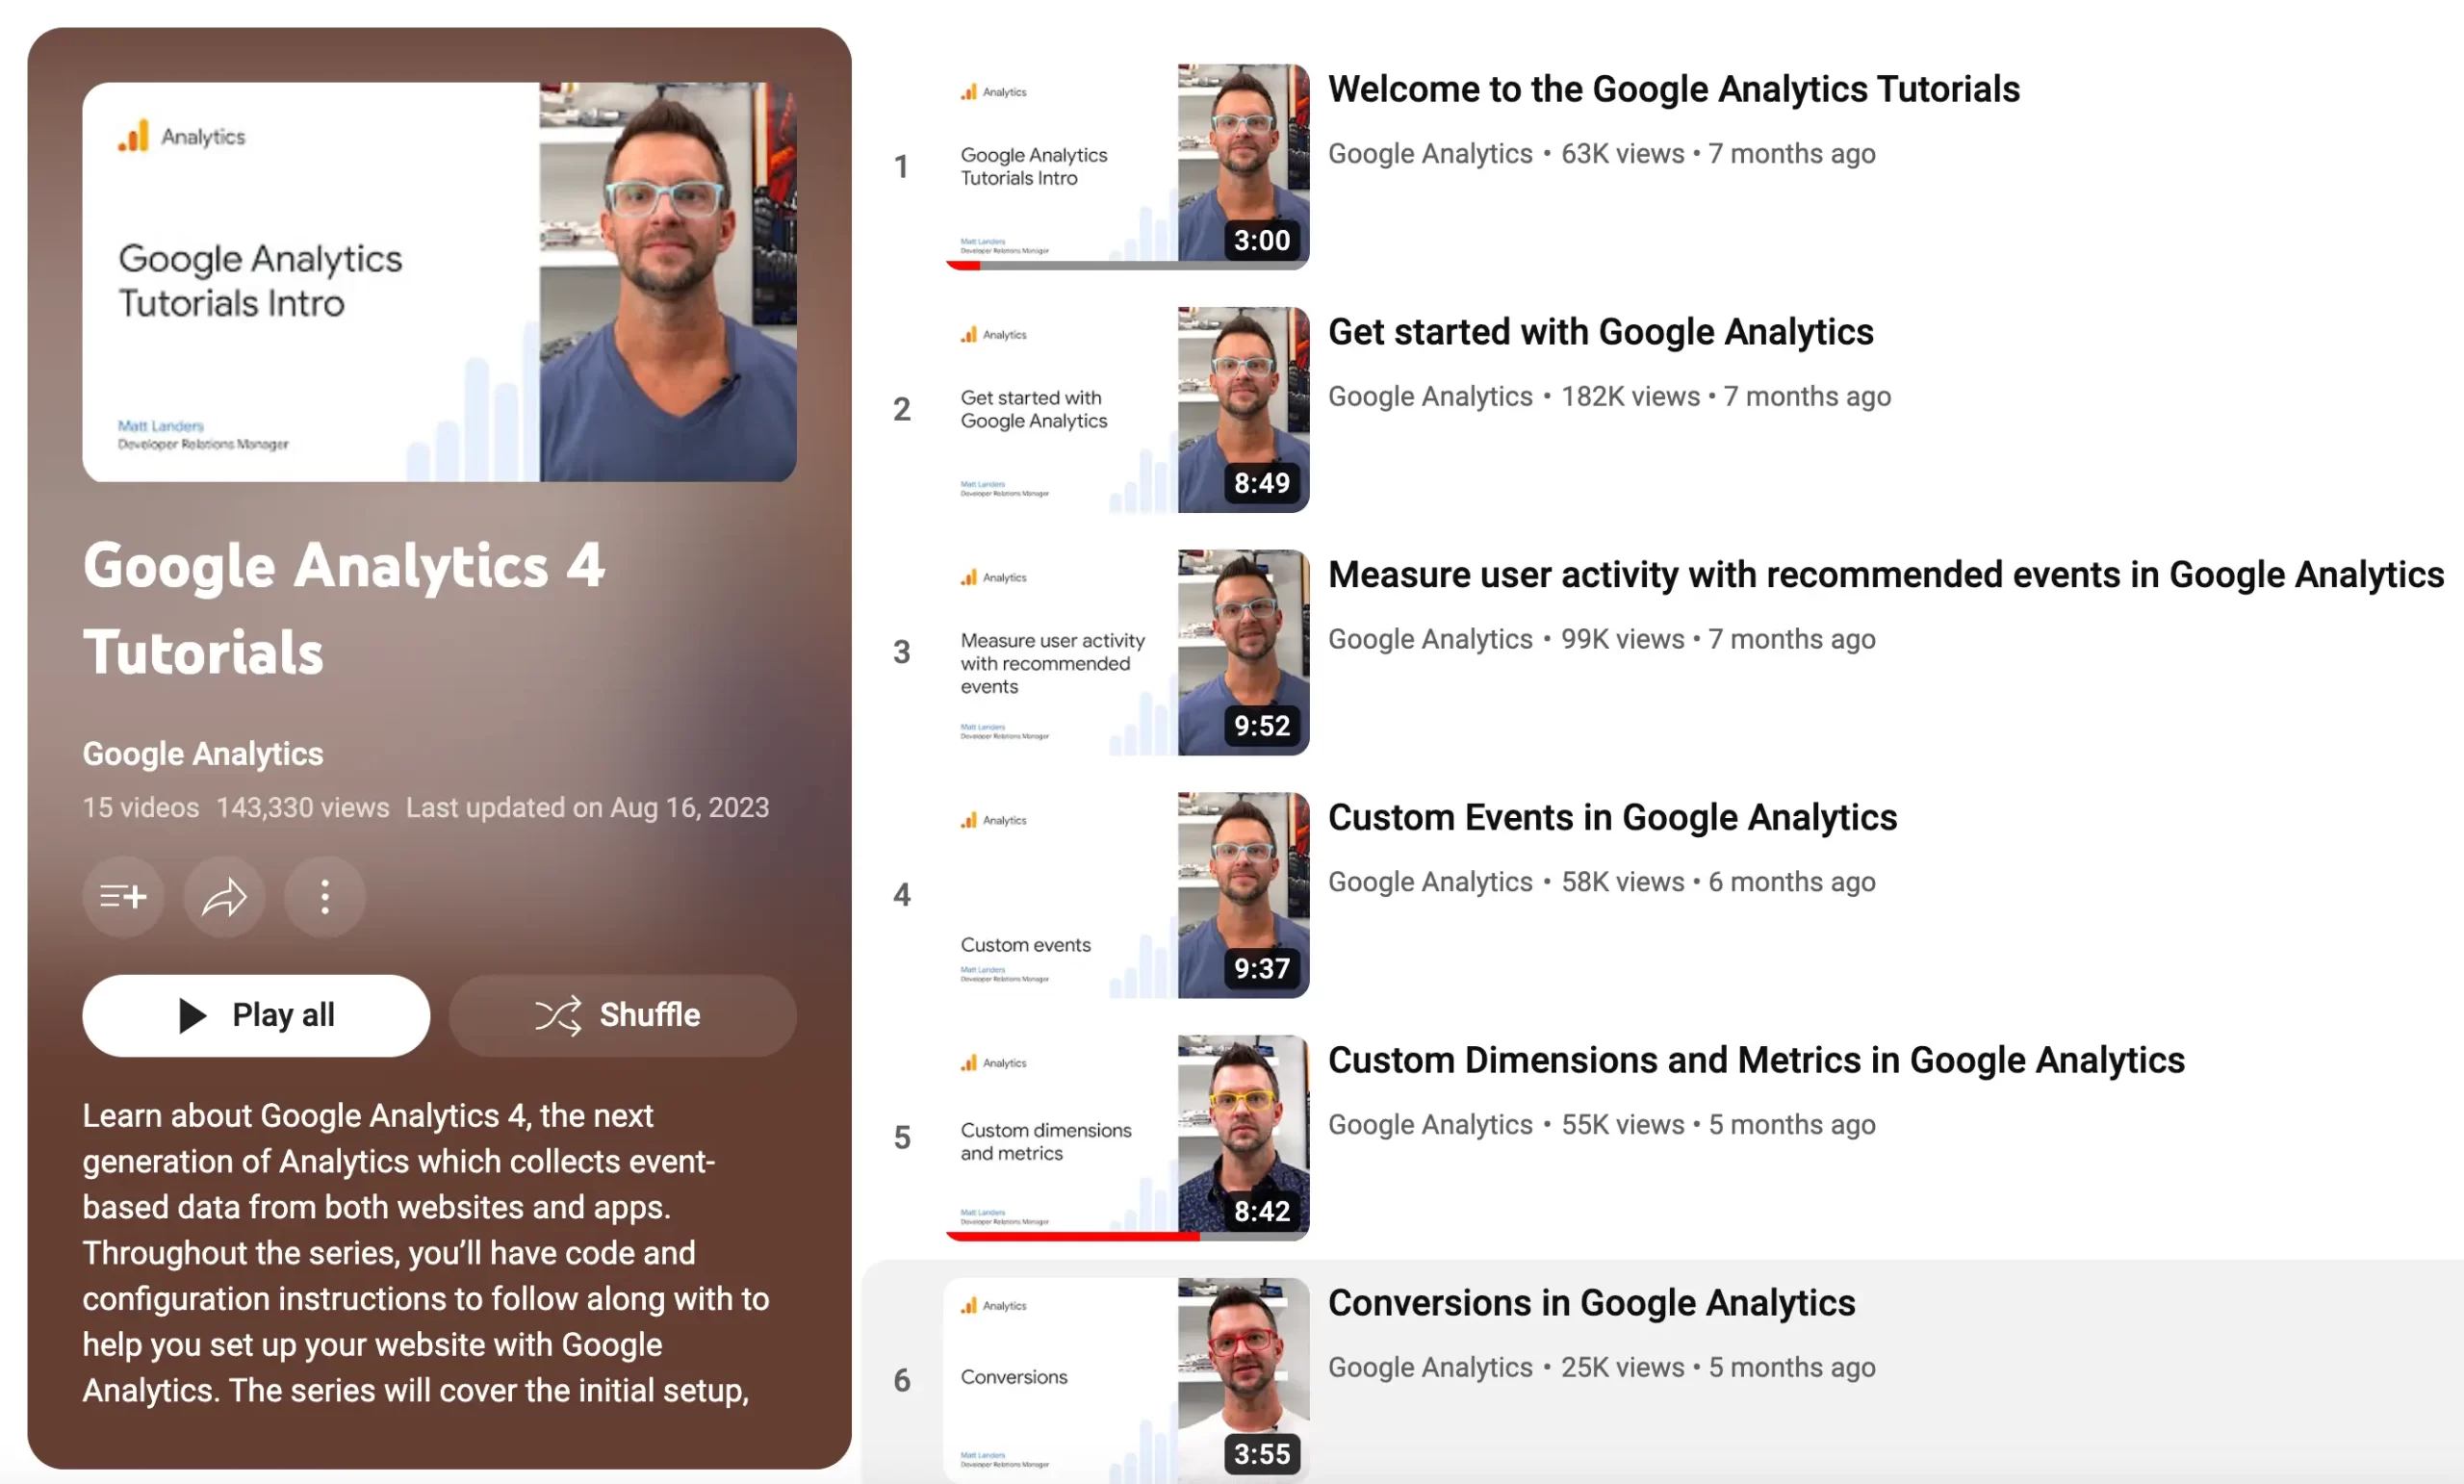 Google Analytics 4 Tutorials